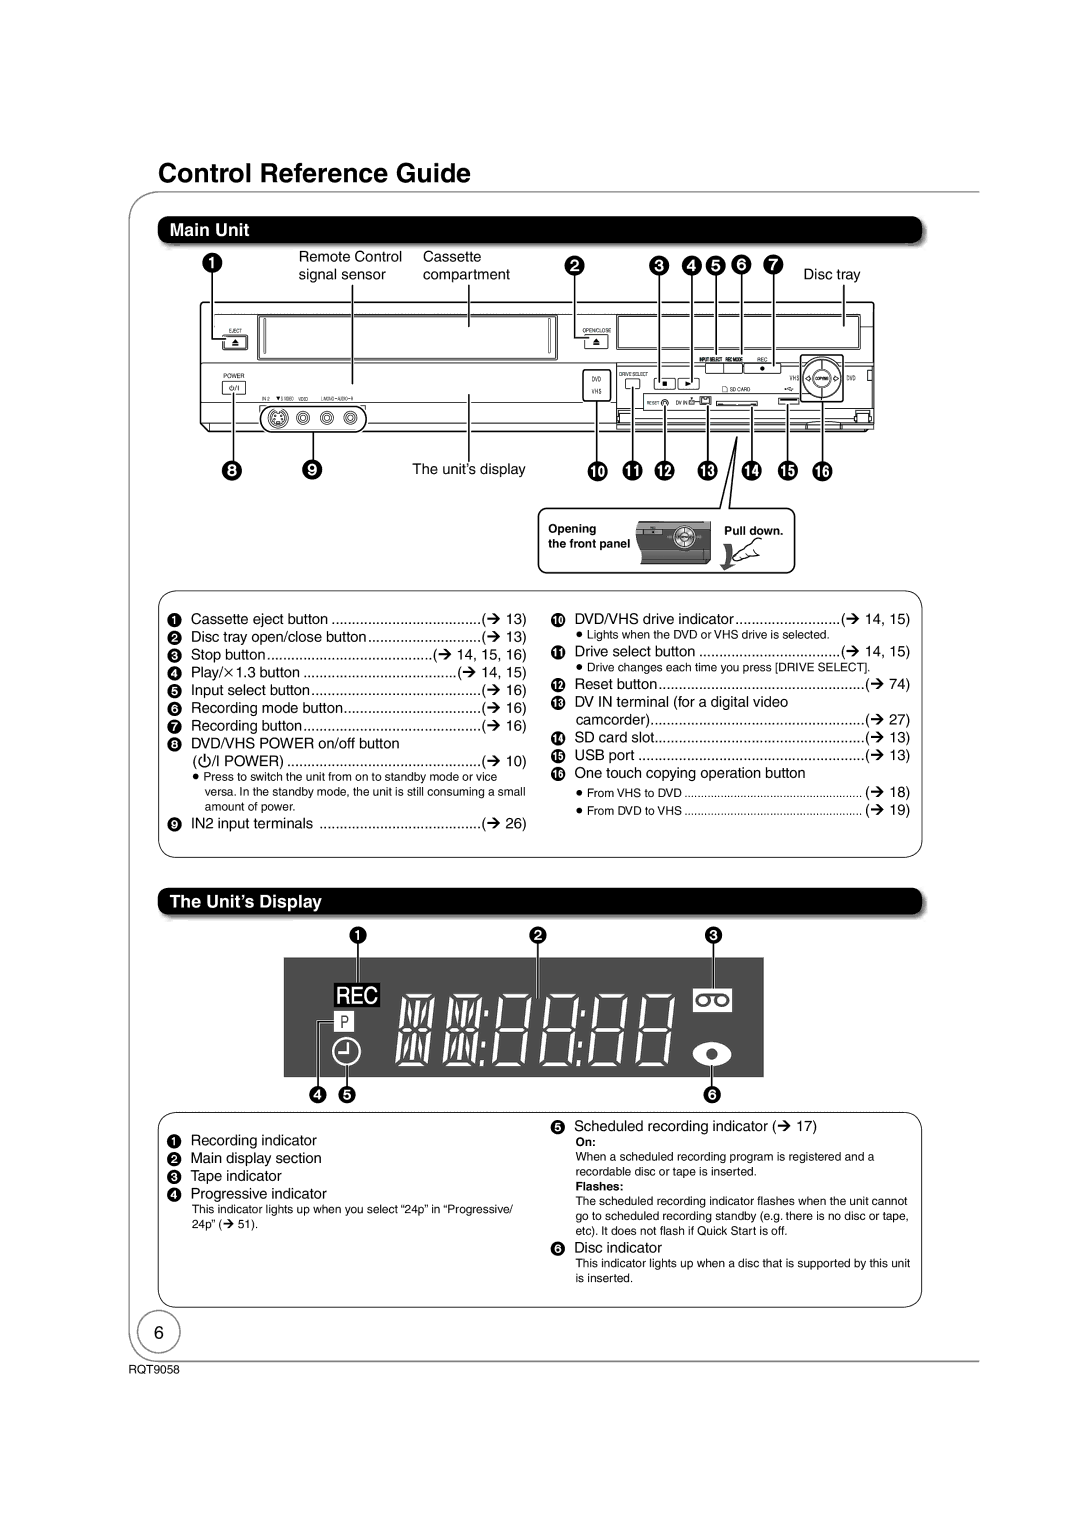 Panasonic DMR-EA38V warranty Control Reference Guide, Main Unit, Unit’s Display, Unit’s display 